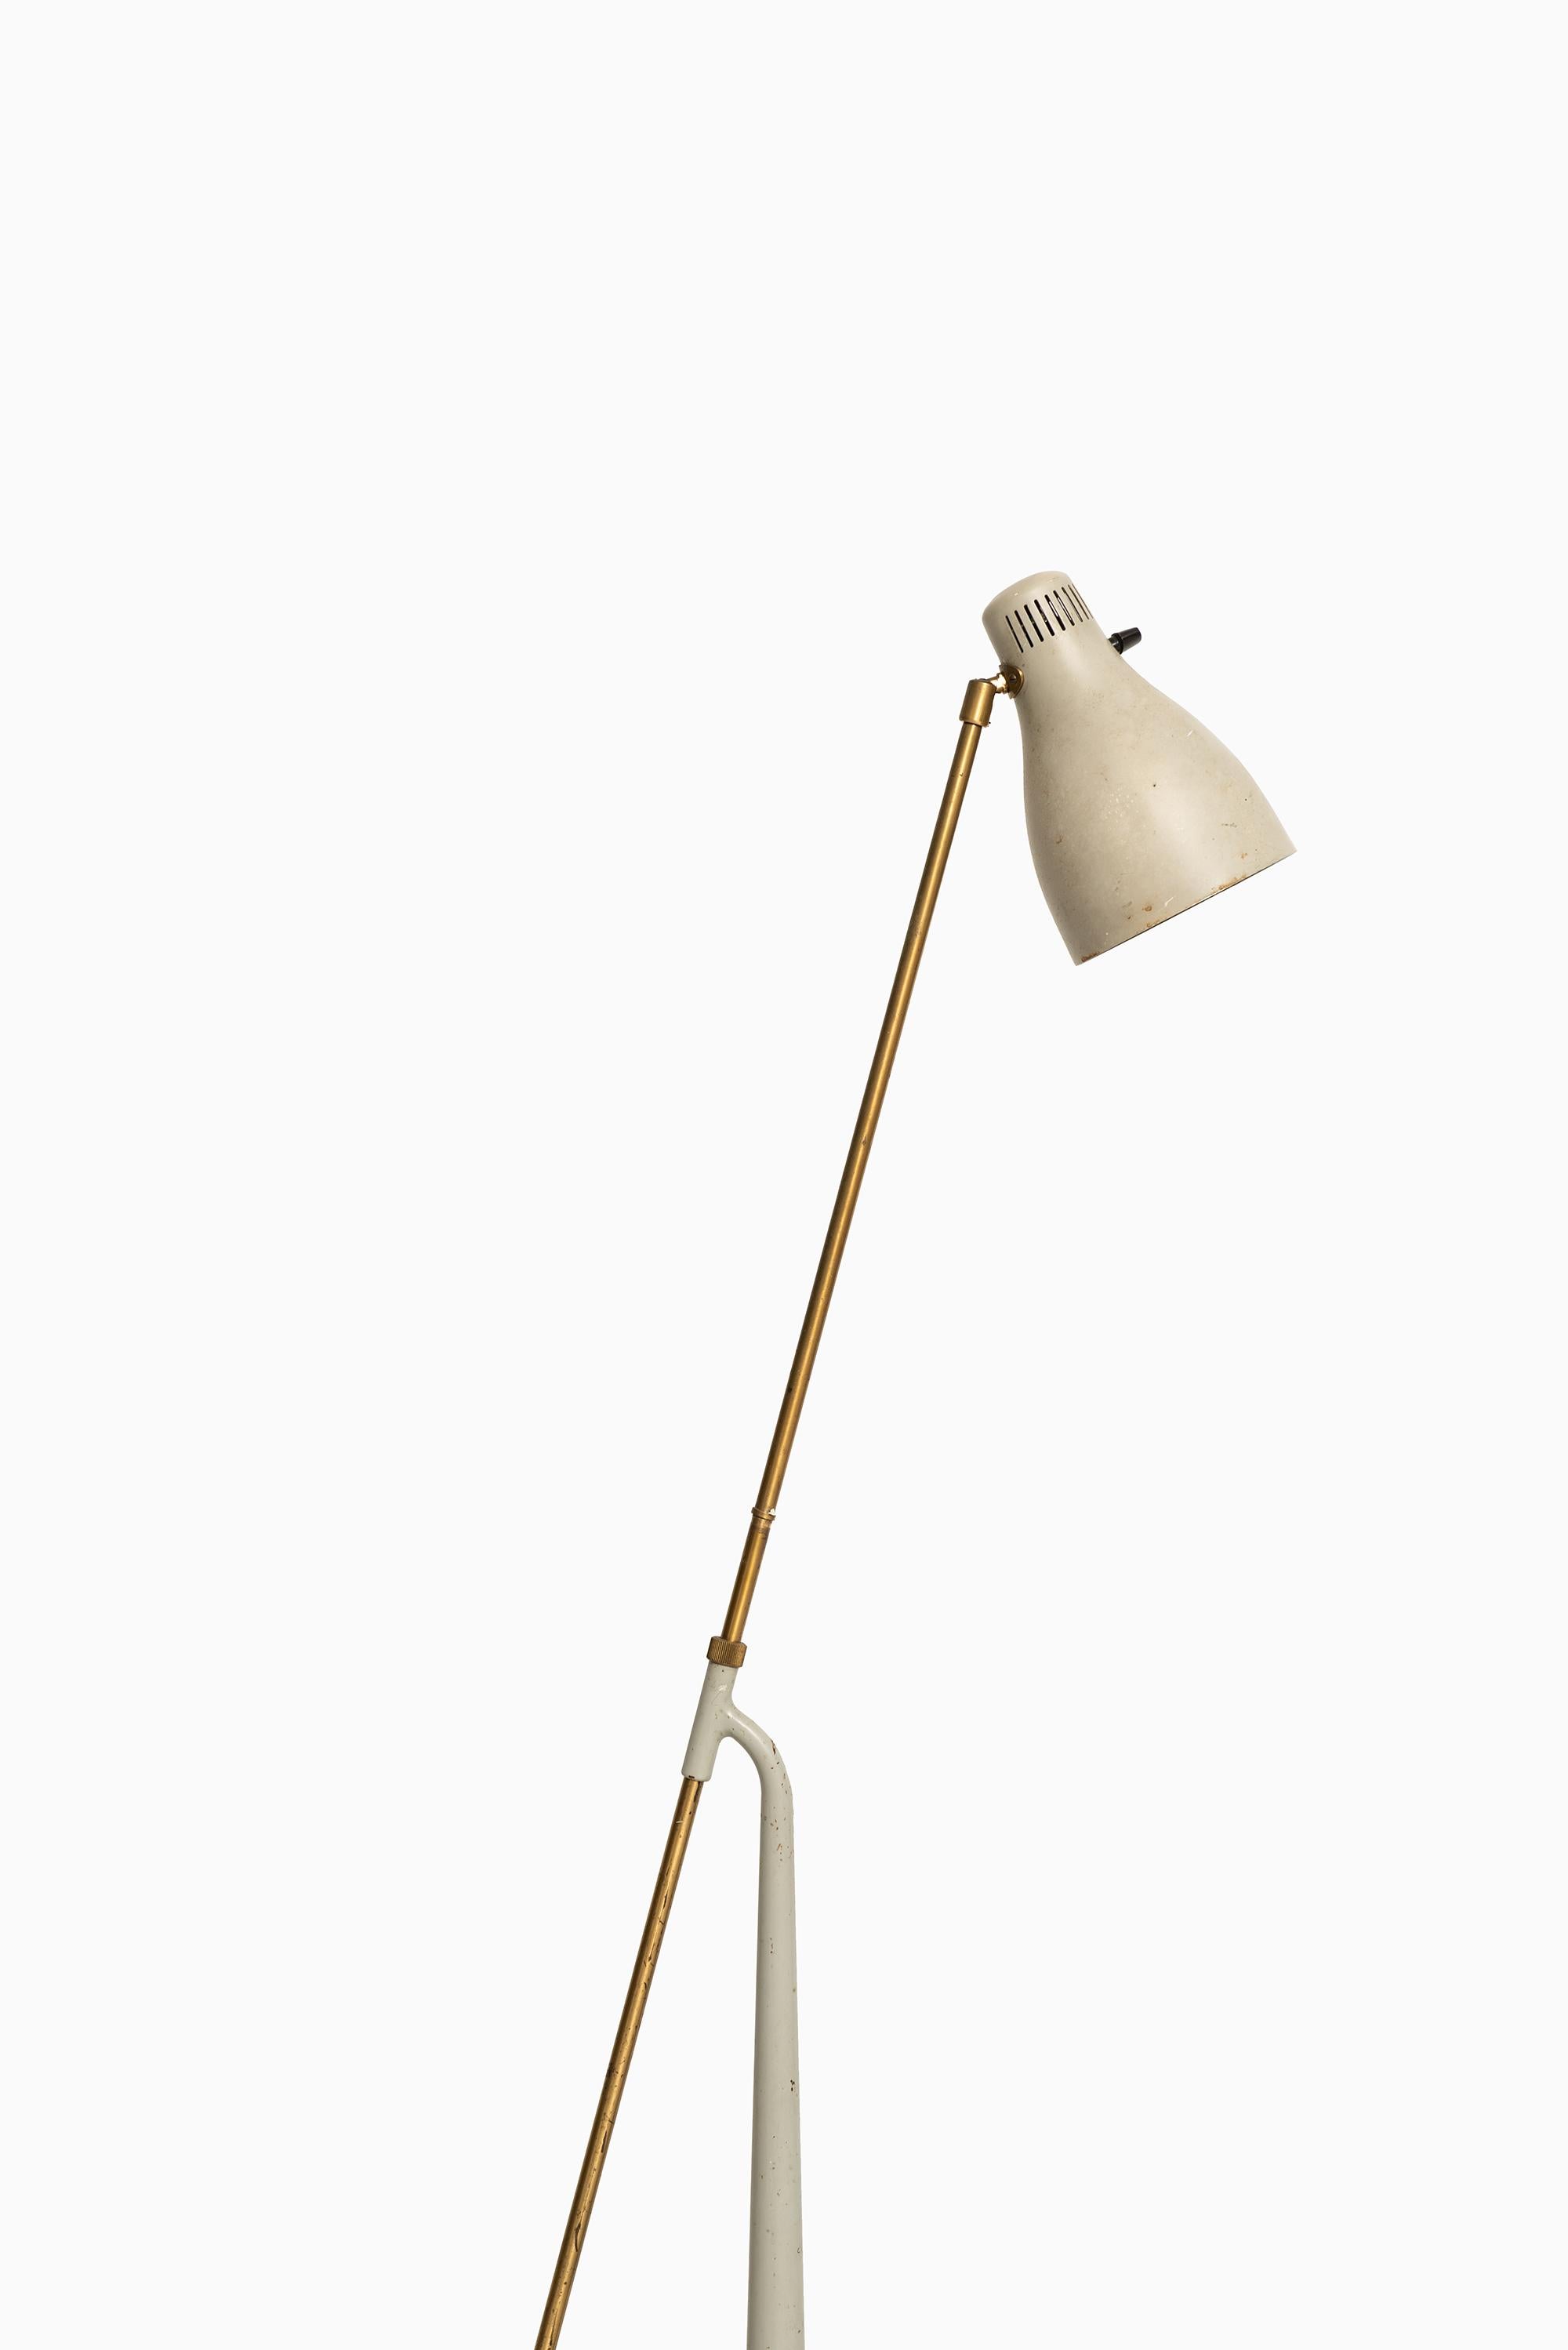 Rare height adjustable floor lamp model 541 designed by Hans Bergström. Produced by Ateljé Lyktan in Åhus, Sweden.